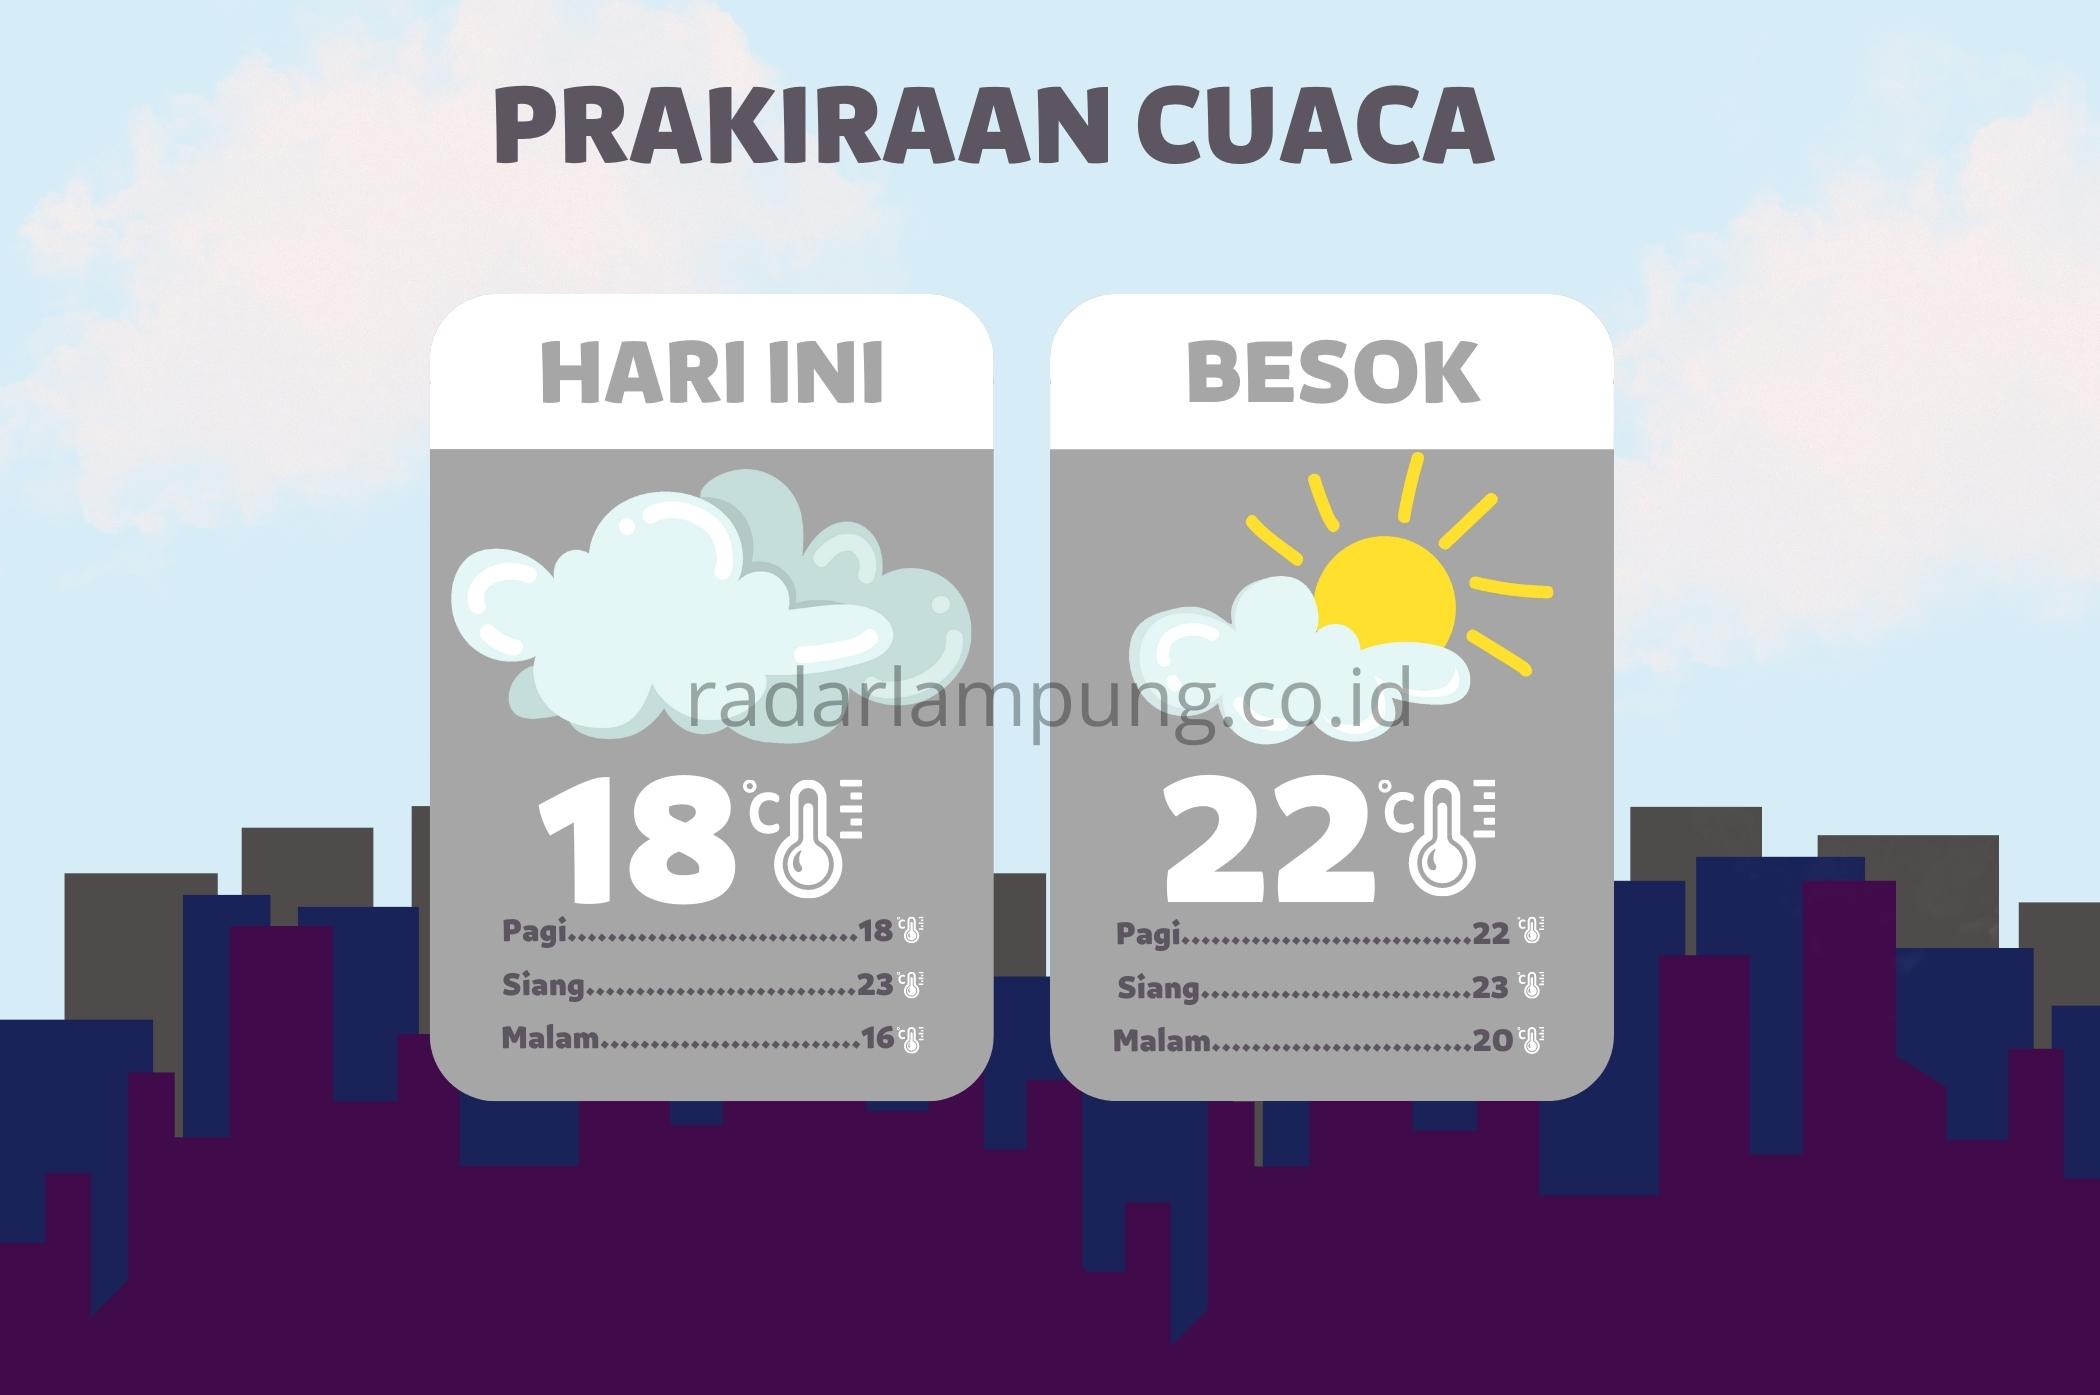 Prakiraan Cuaca di Lampung Hari Ini, Kamis 29 September 2022